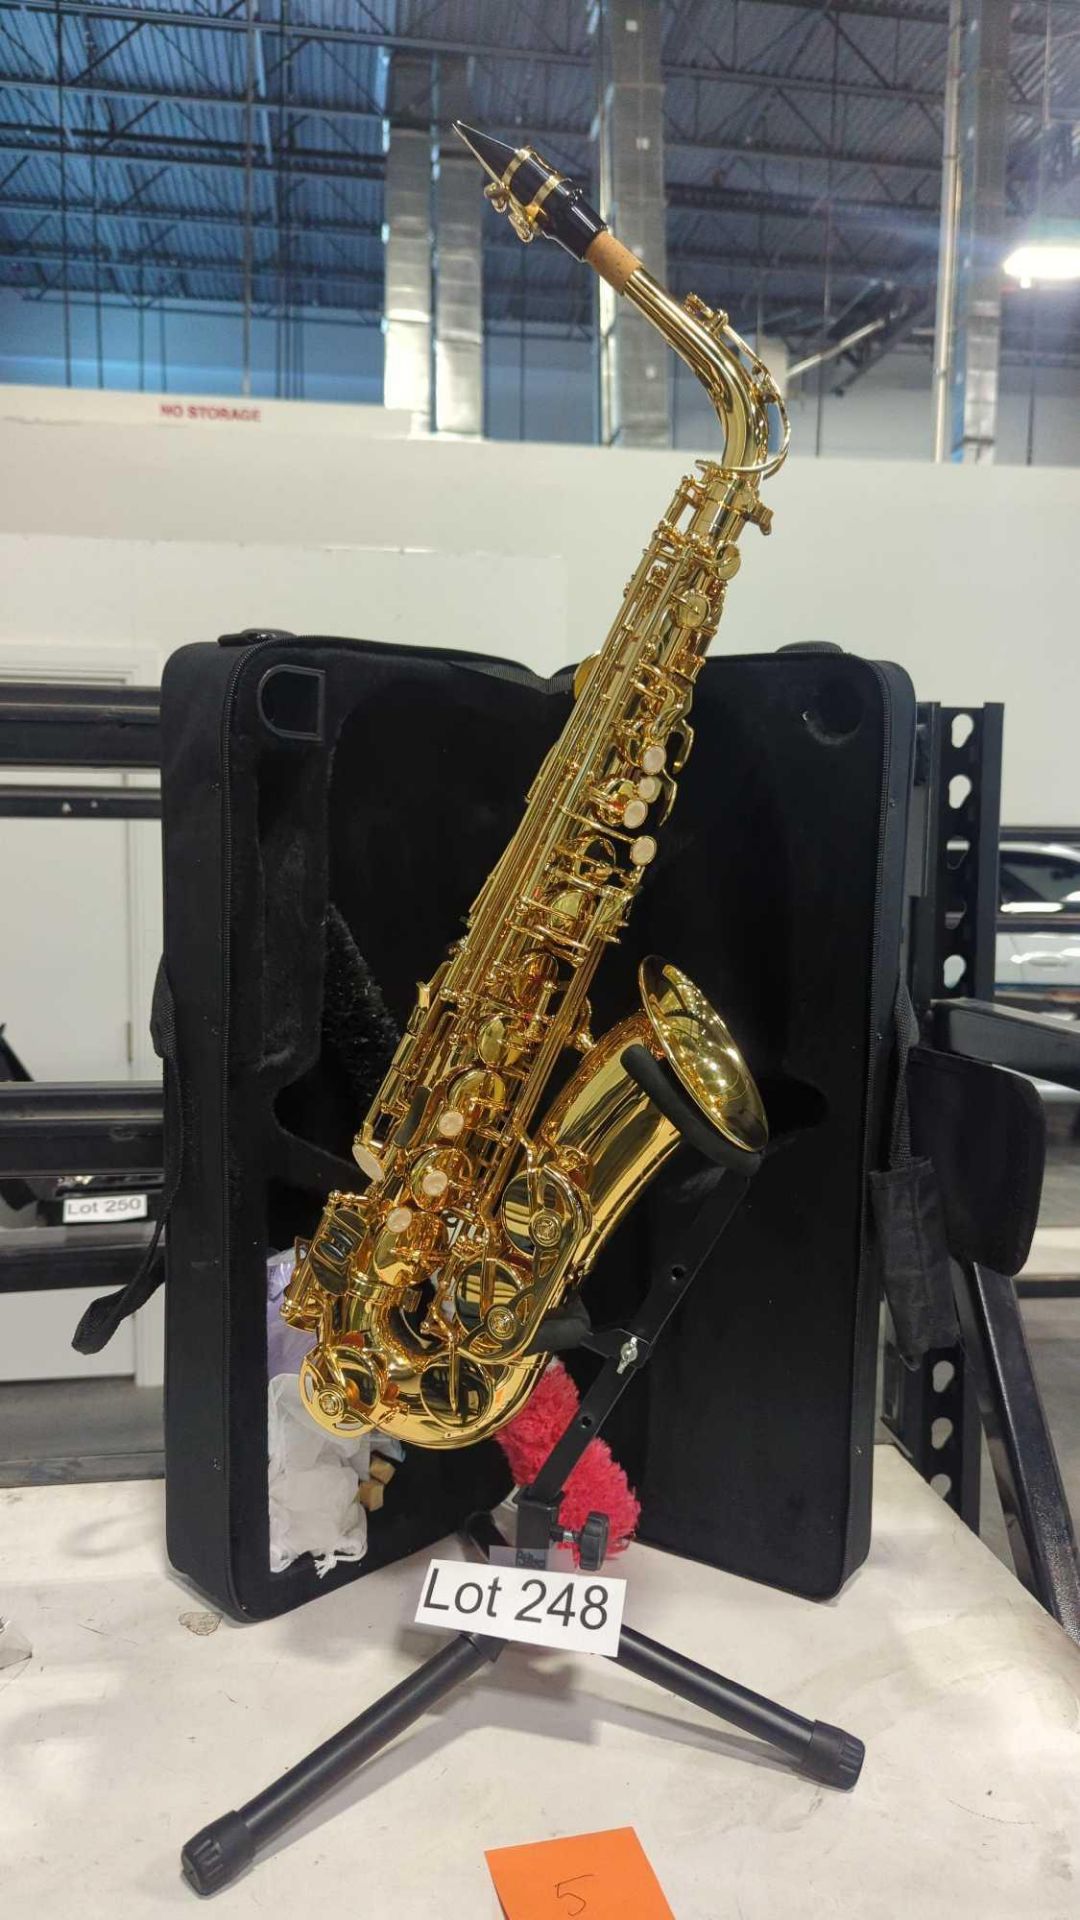 Muscial Instrument: Saxophone